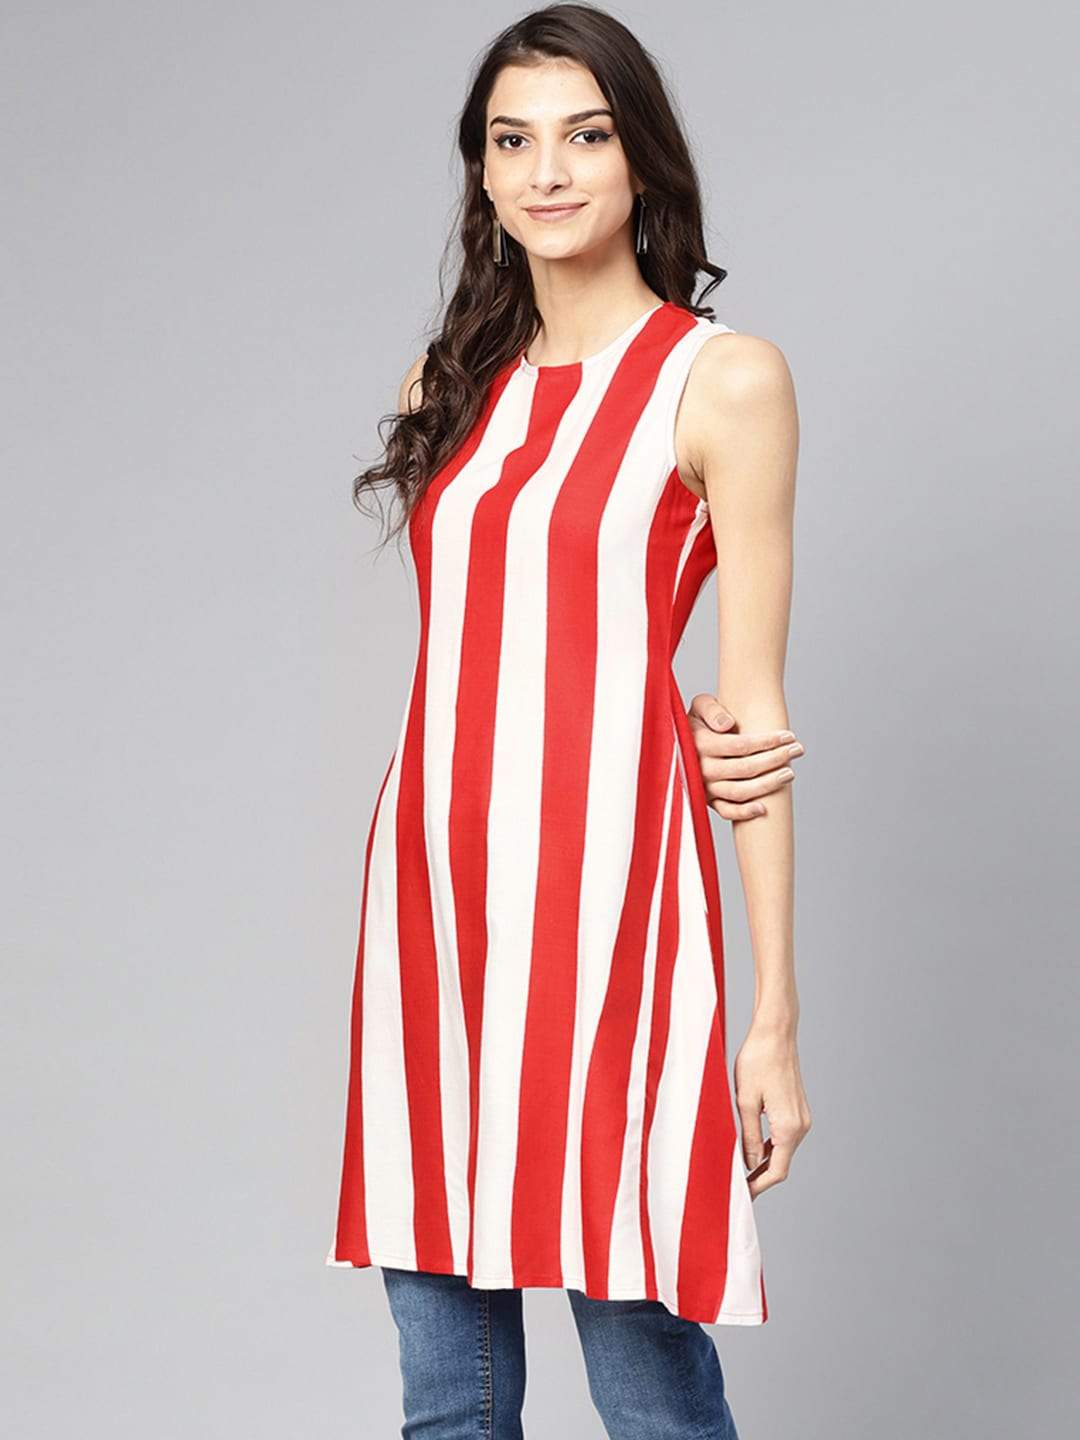 Women's Red & White Striped A-Line Dress - Meeranshi